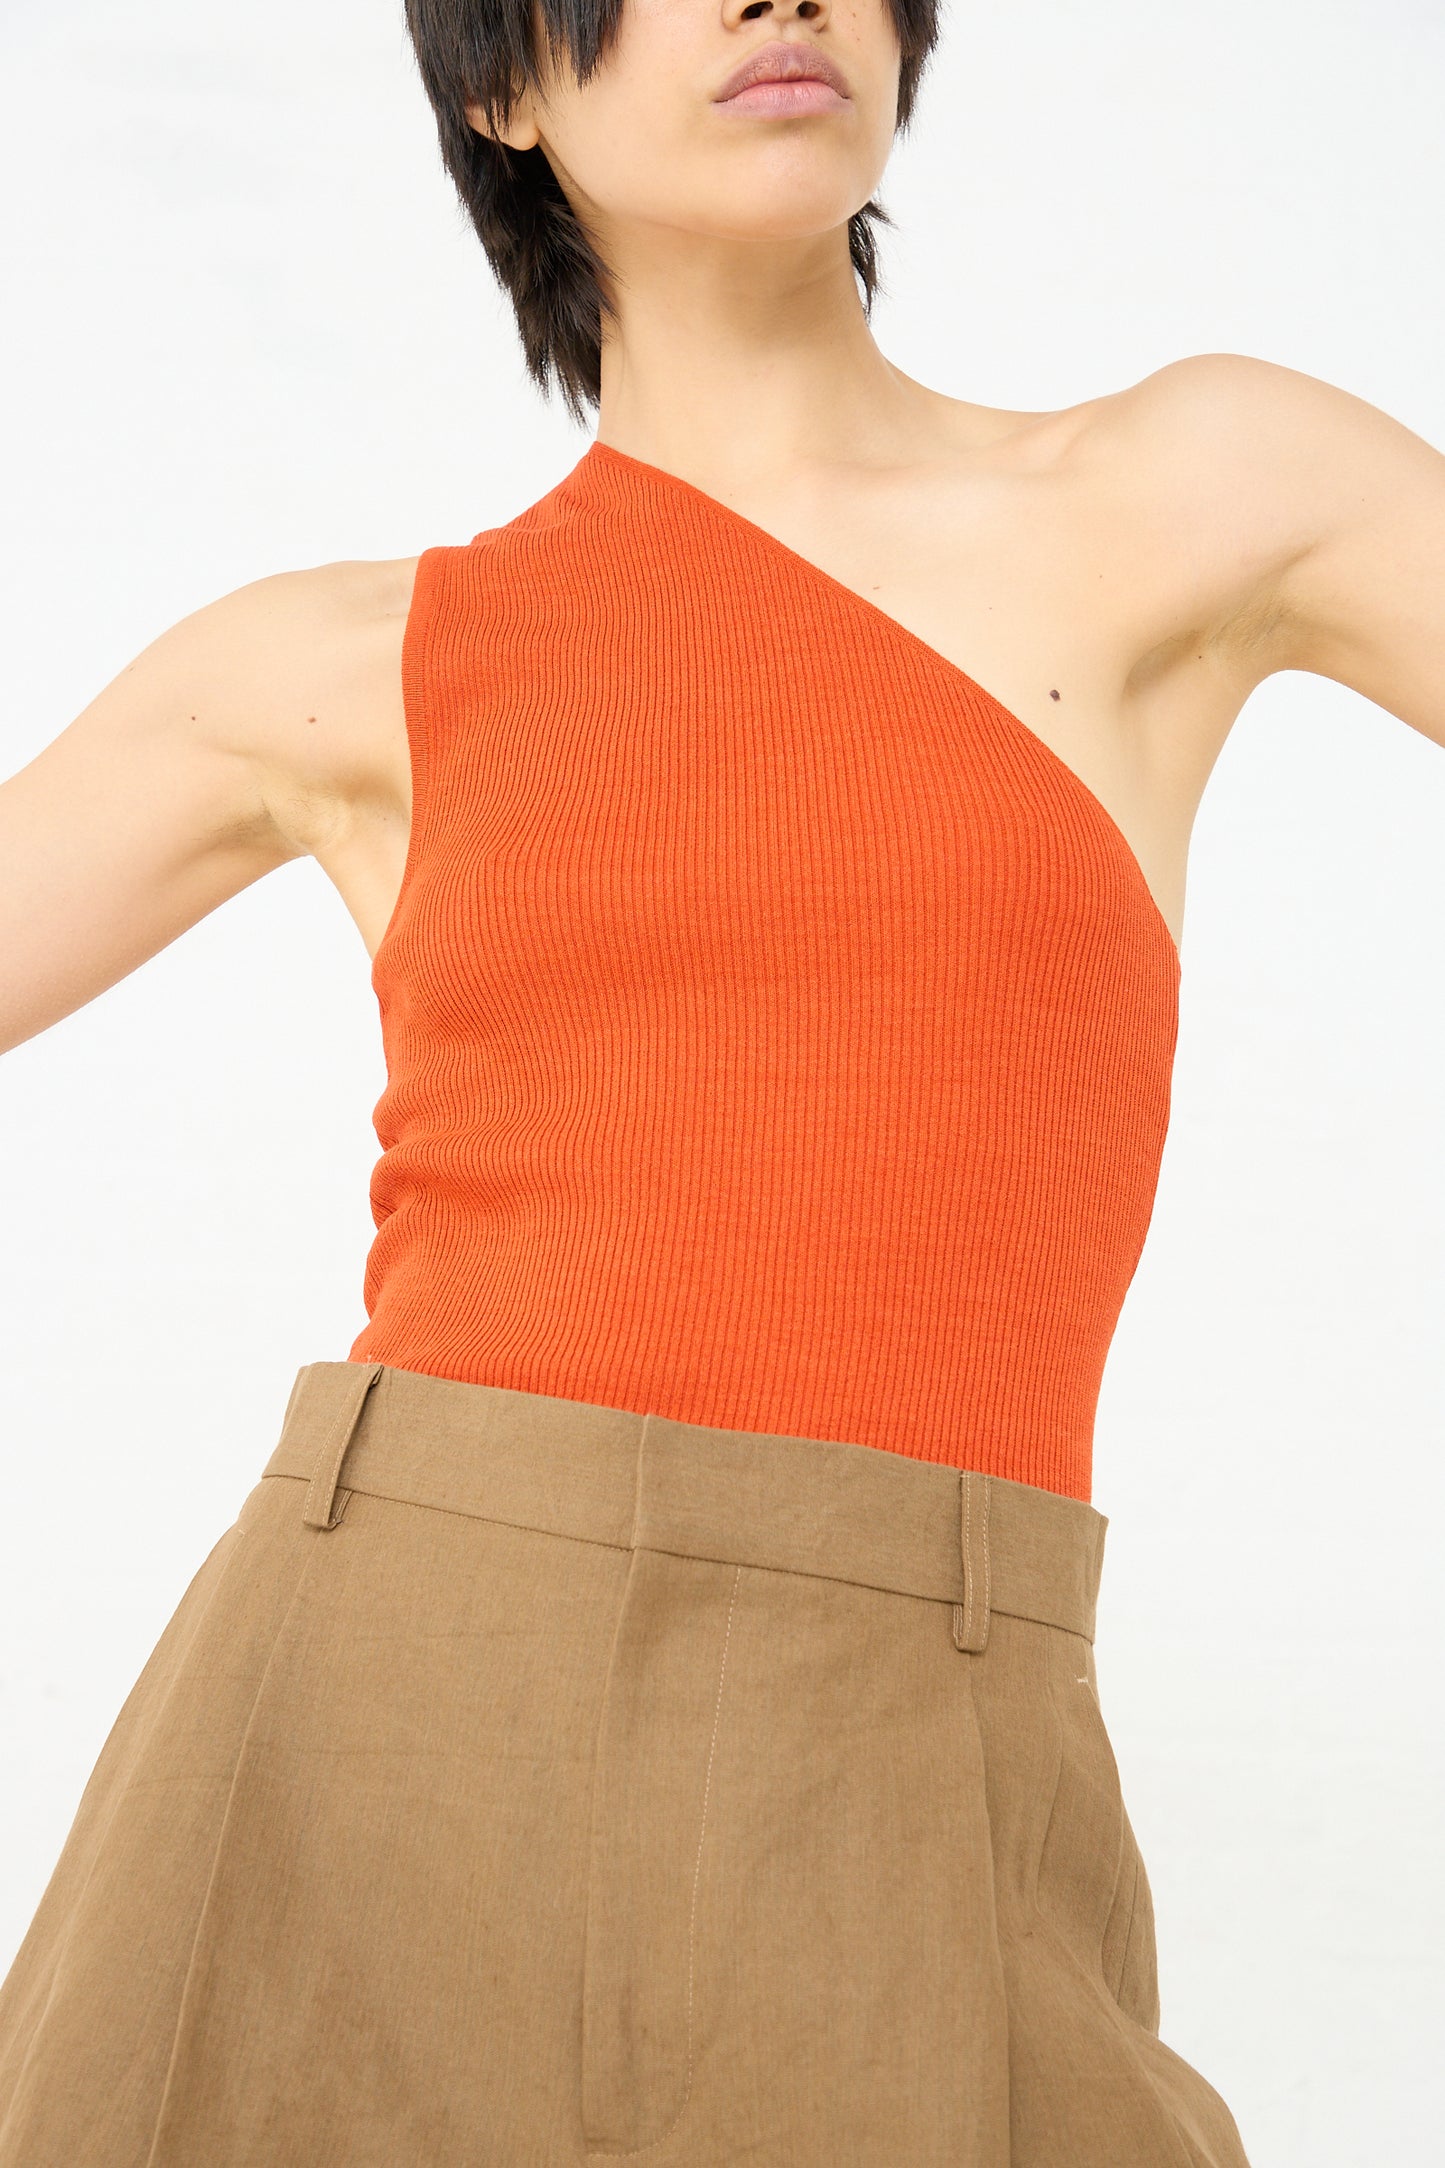 A woman in a Ribbed Silk Asymmetrical Top in Orange by Cristaseya.